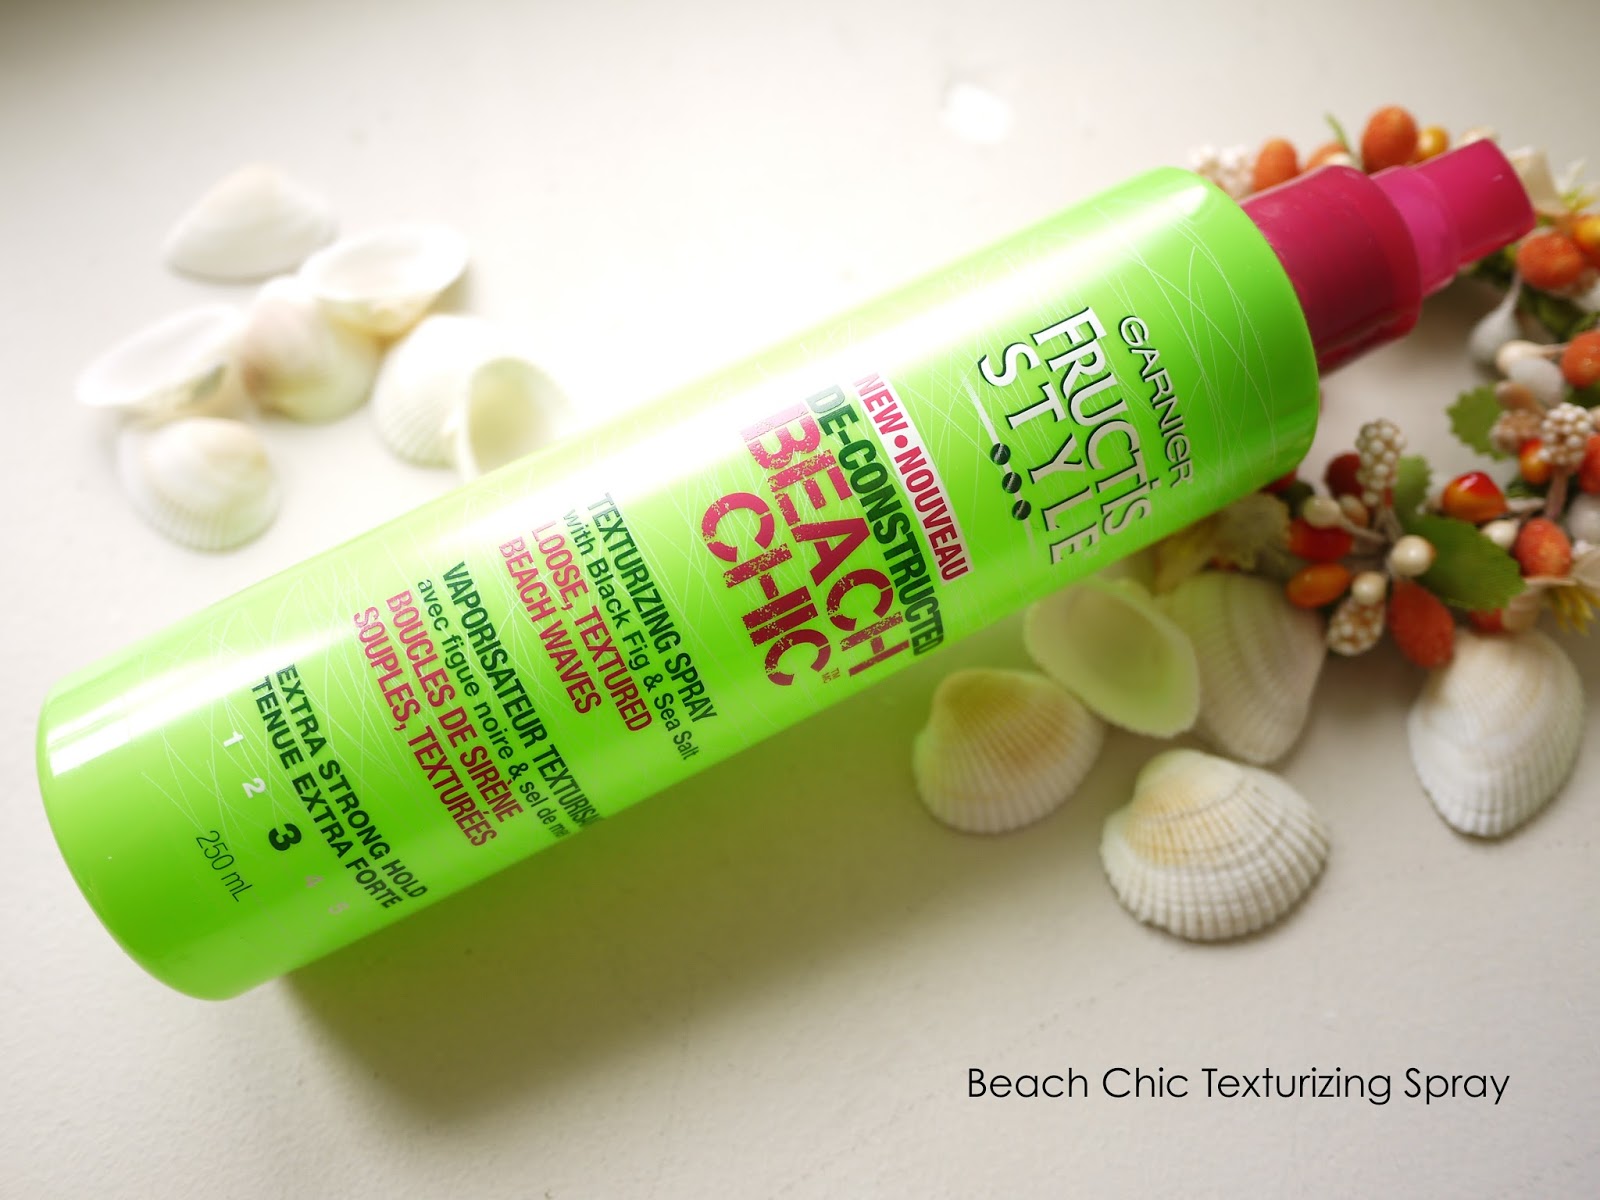 garnier deconstructed beach chic hair spray pixie play creme move it gel review